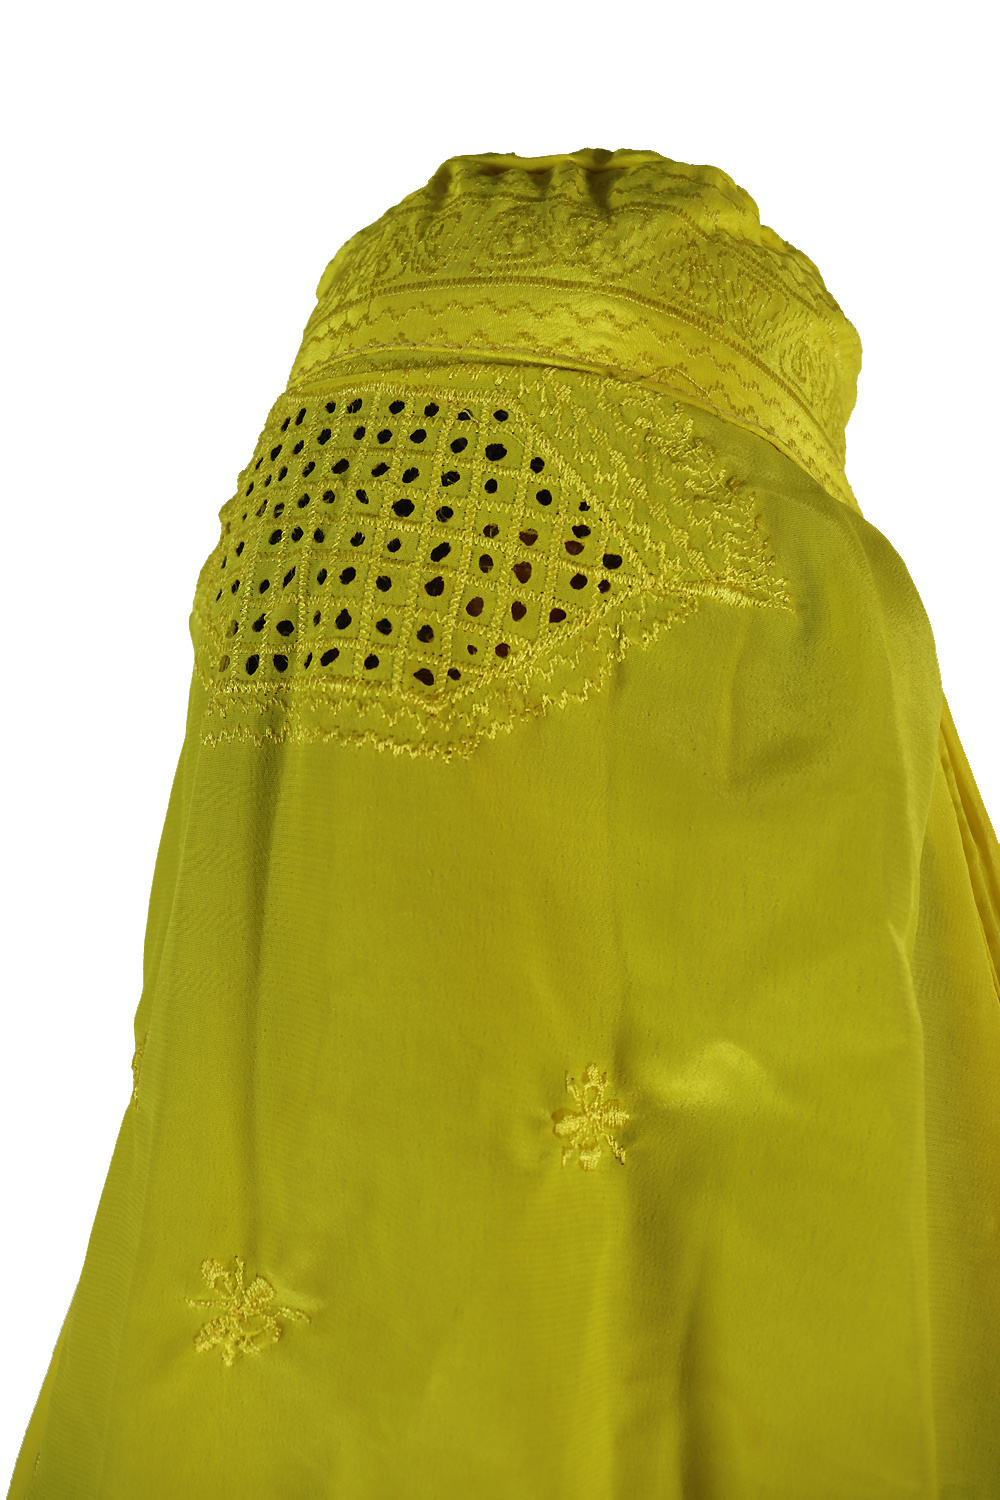 Burqa Yellow (B)